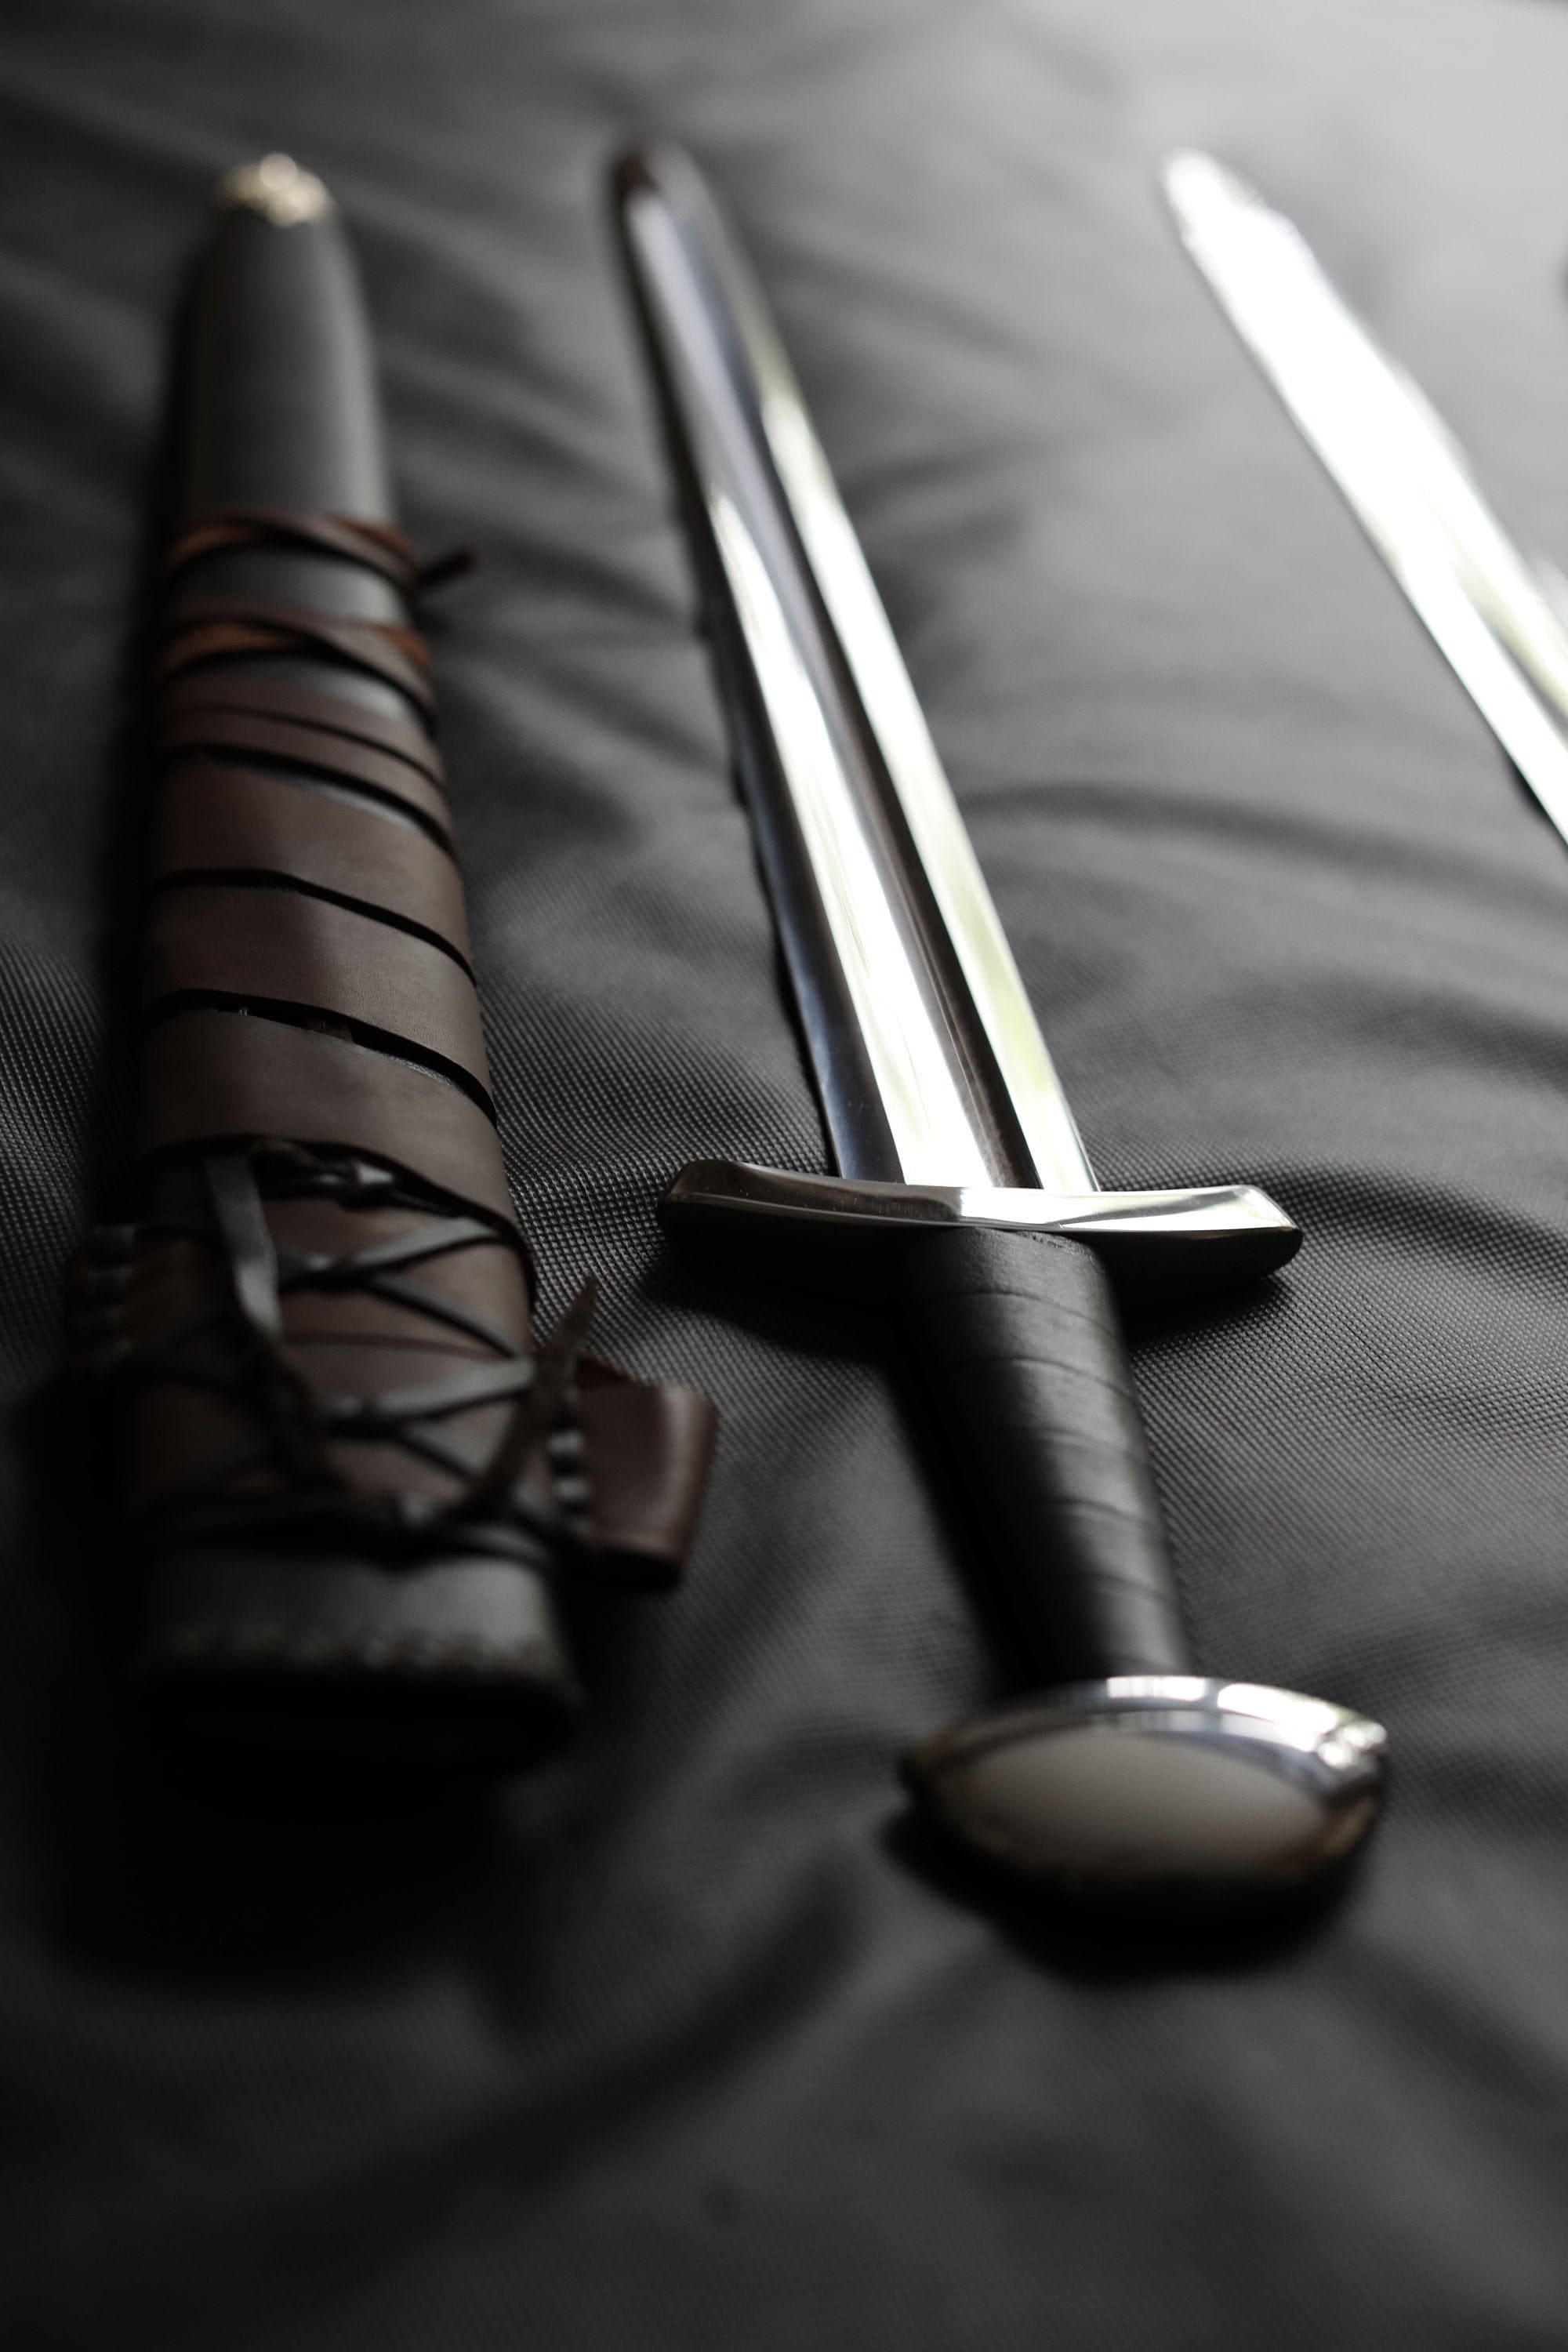 Espada vikinga, espada lista para la batalla, espada buhurt -  México